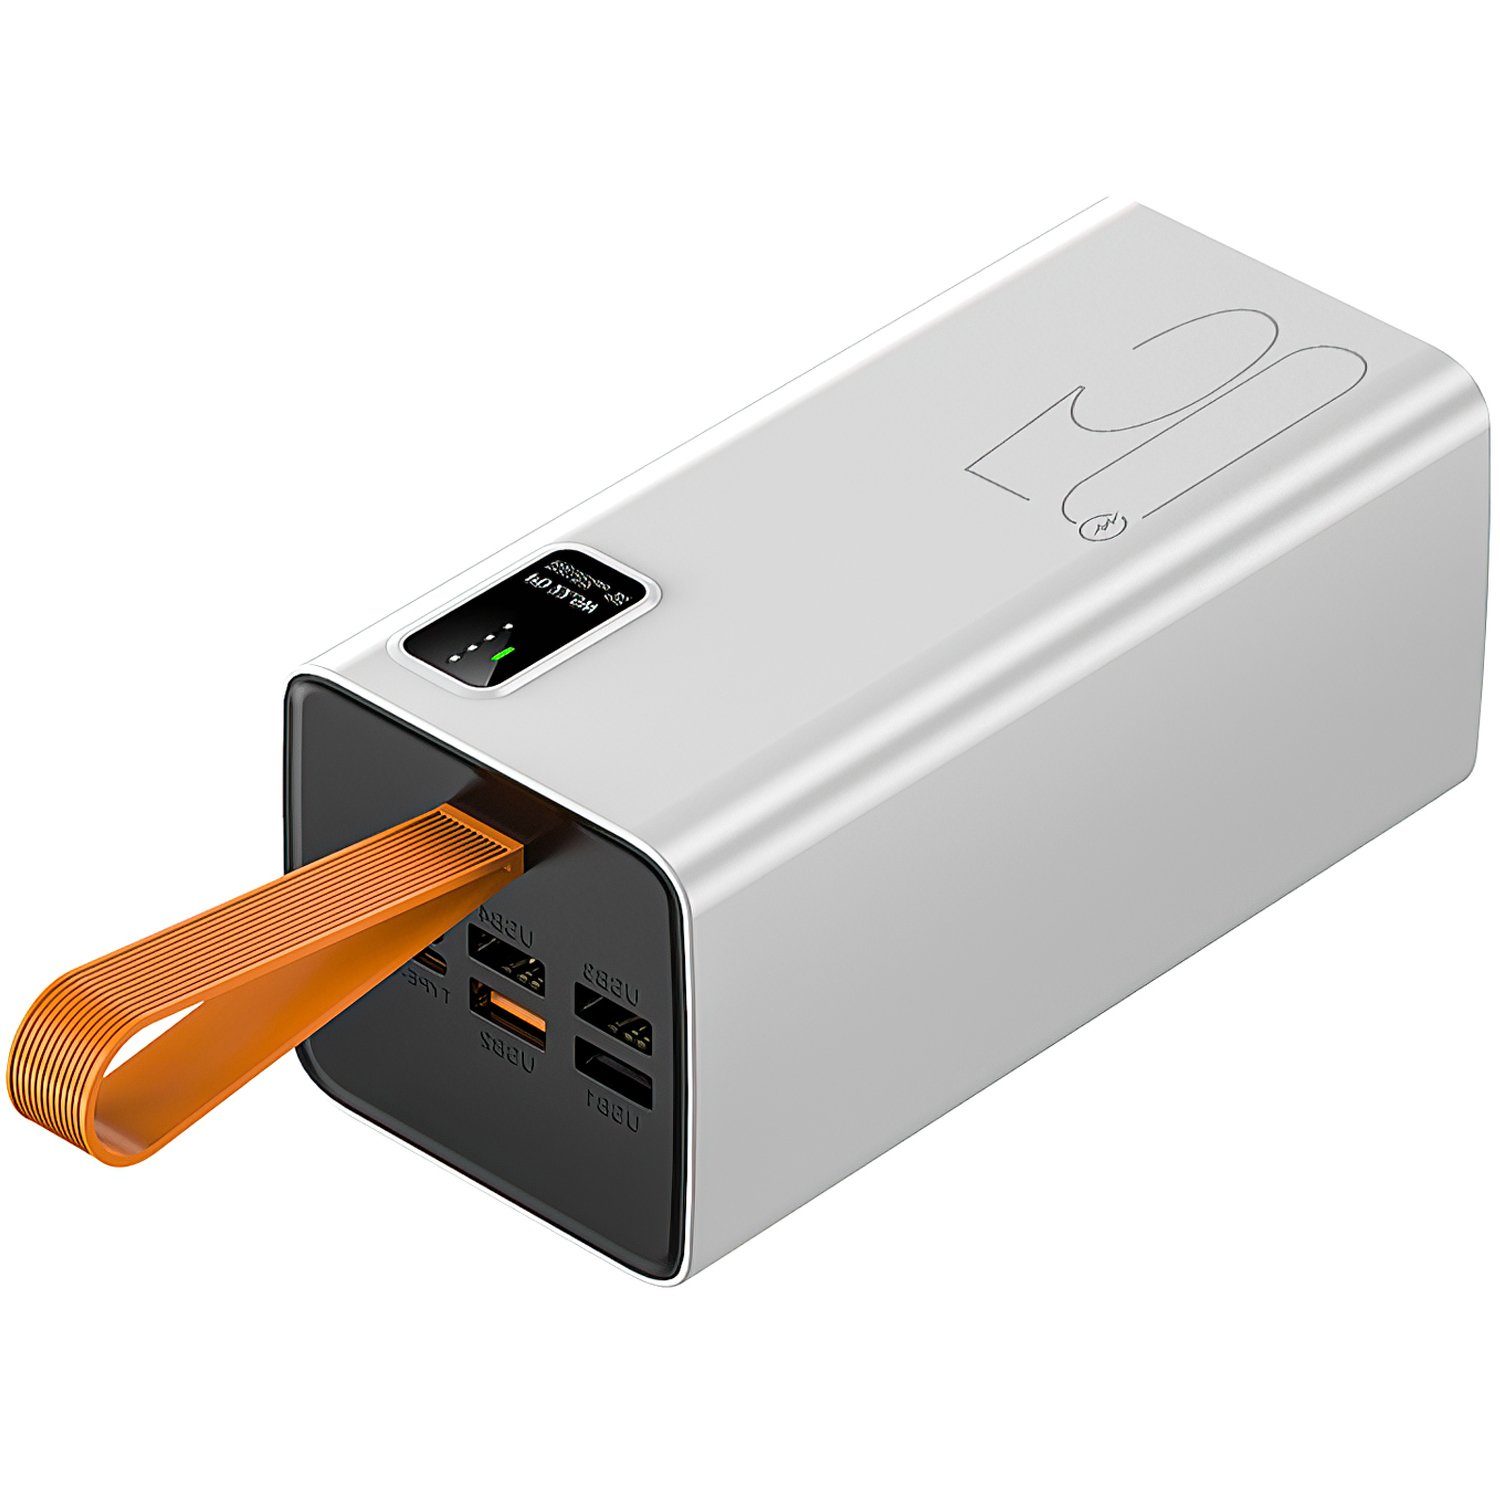 50000mAh Mini Power Bank USB Tragbar Externer Batterie Ladegerät für Handy